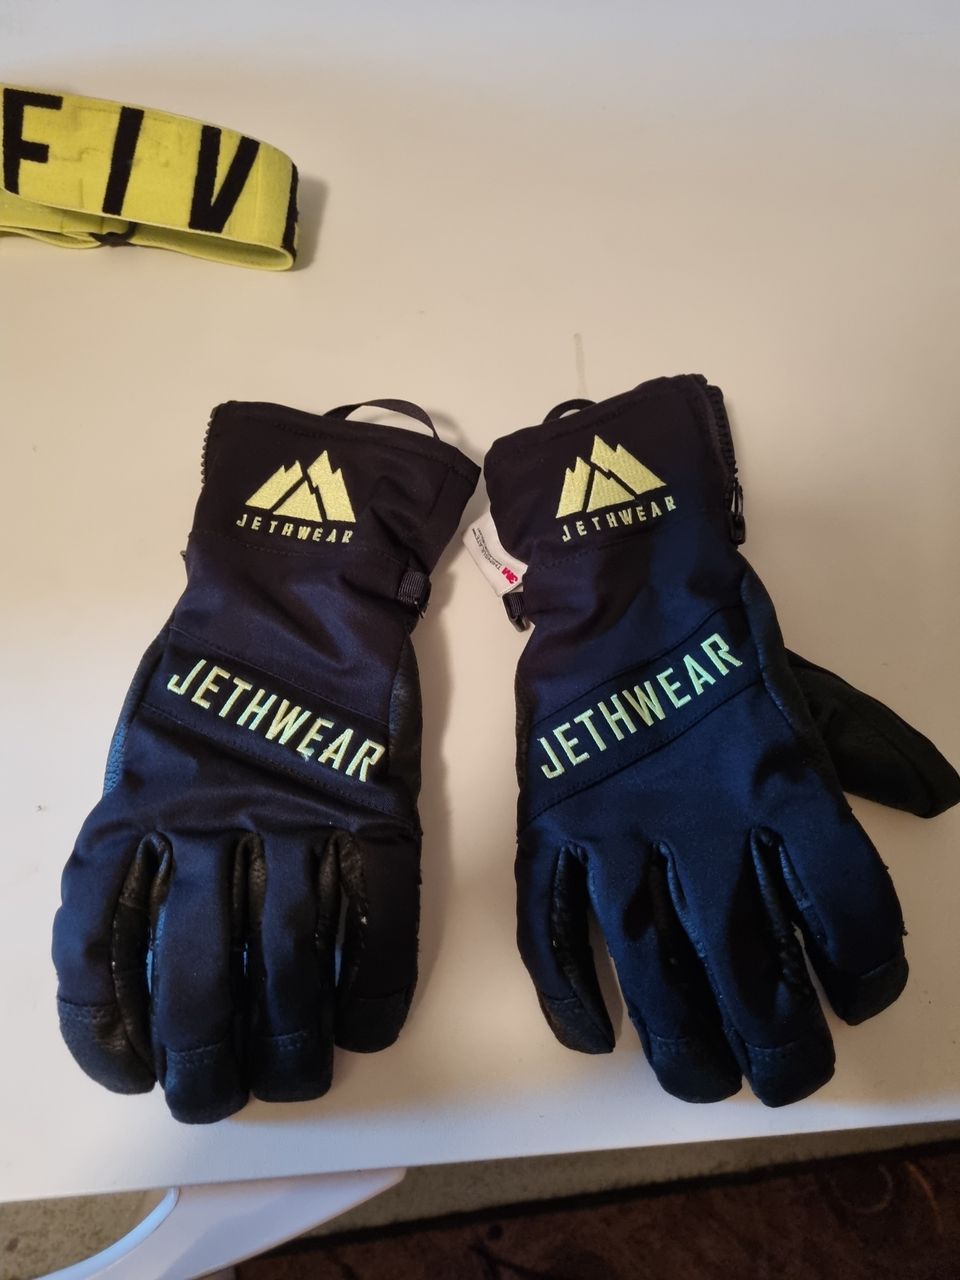 Jethwear empire glove